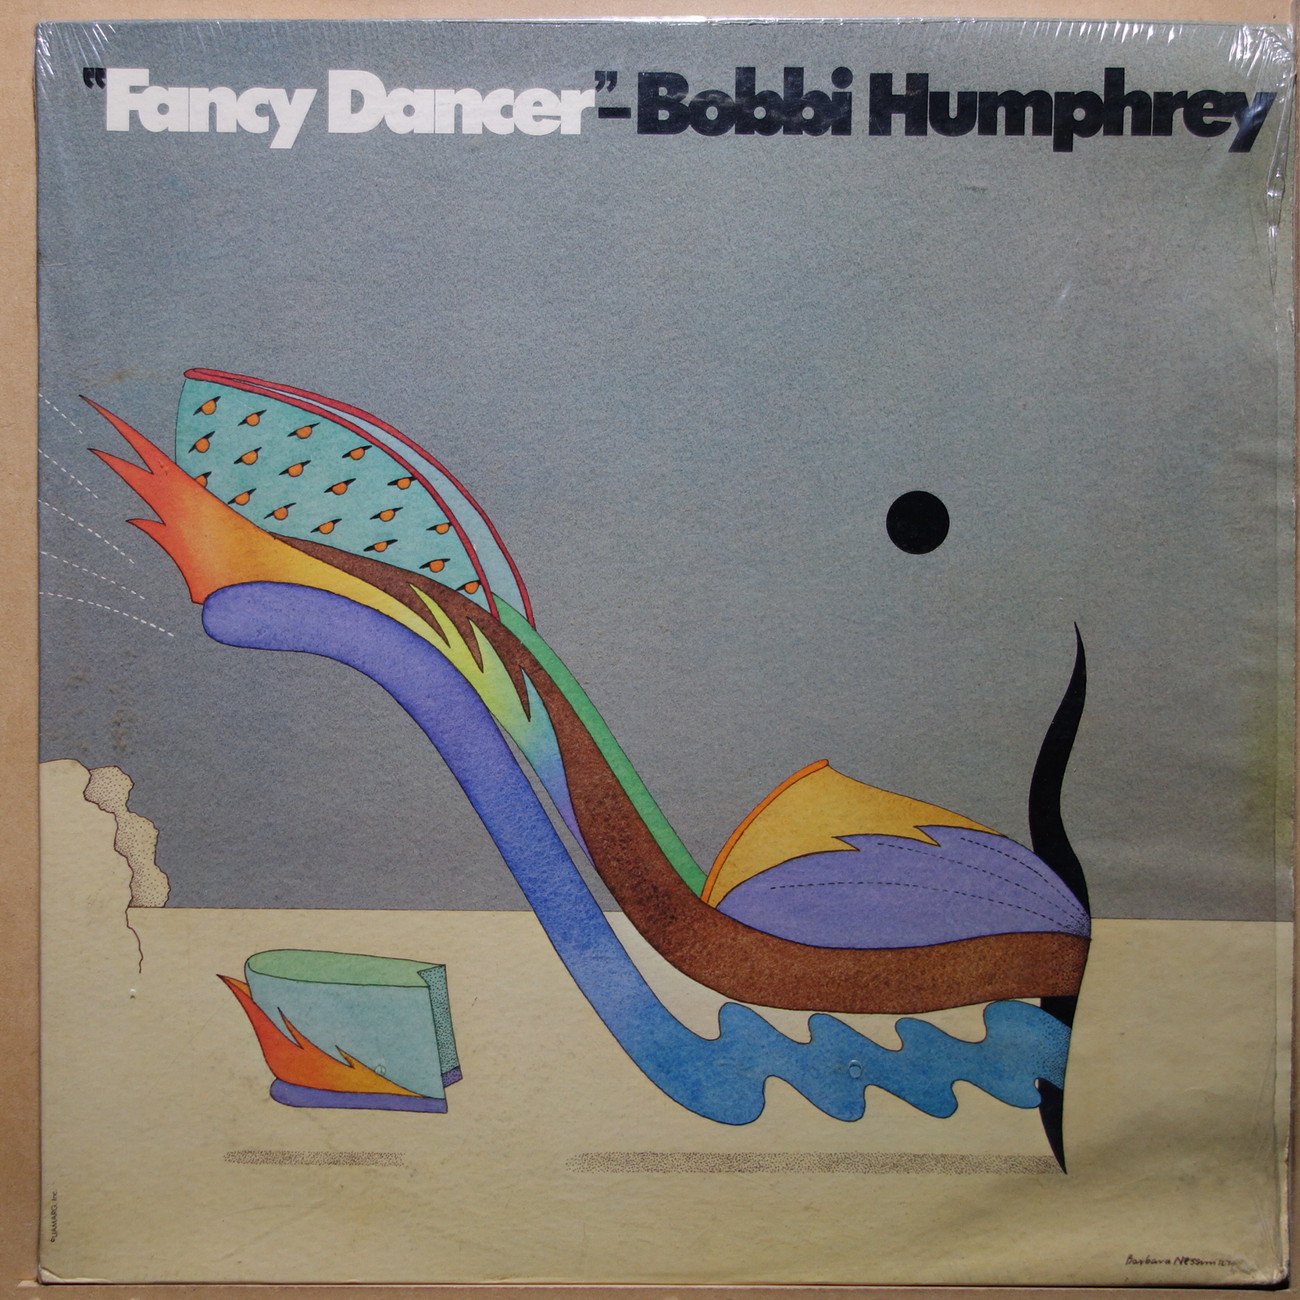 Bobbi Humphrey Fancy Dancer Vinylian Vintage Vinyl Record Shop